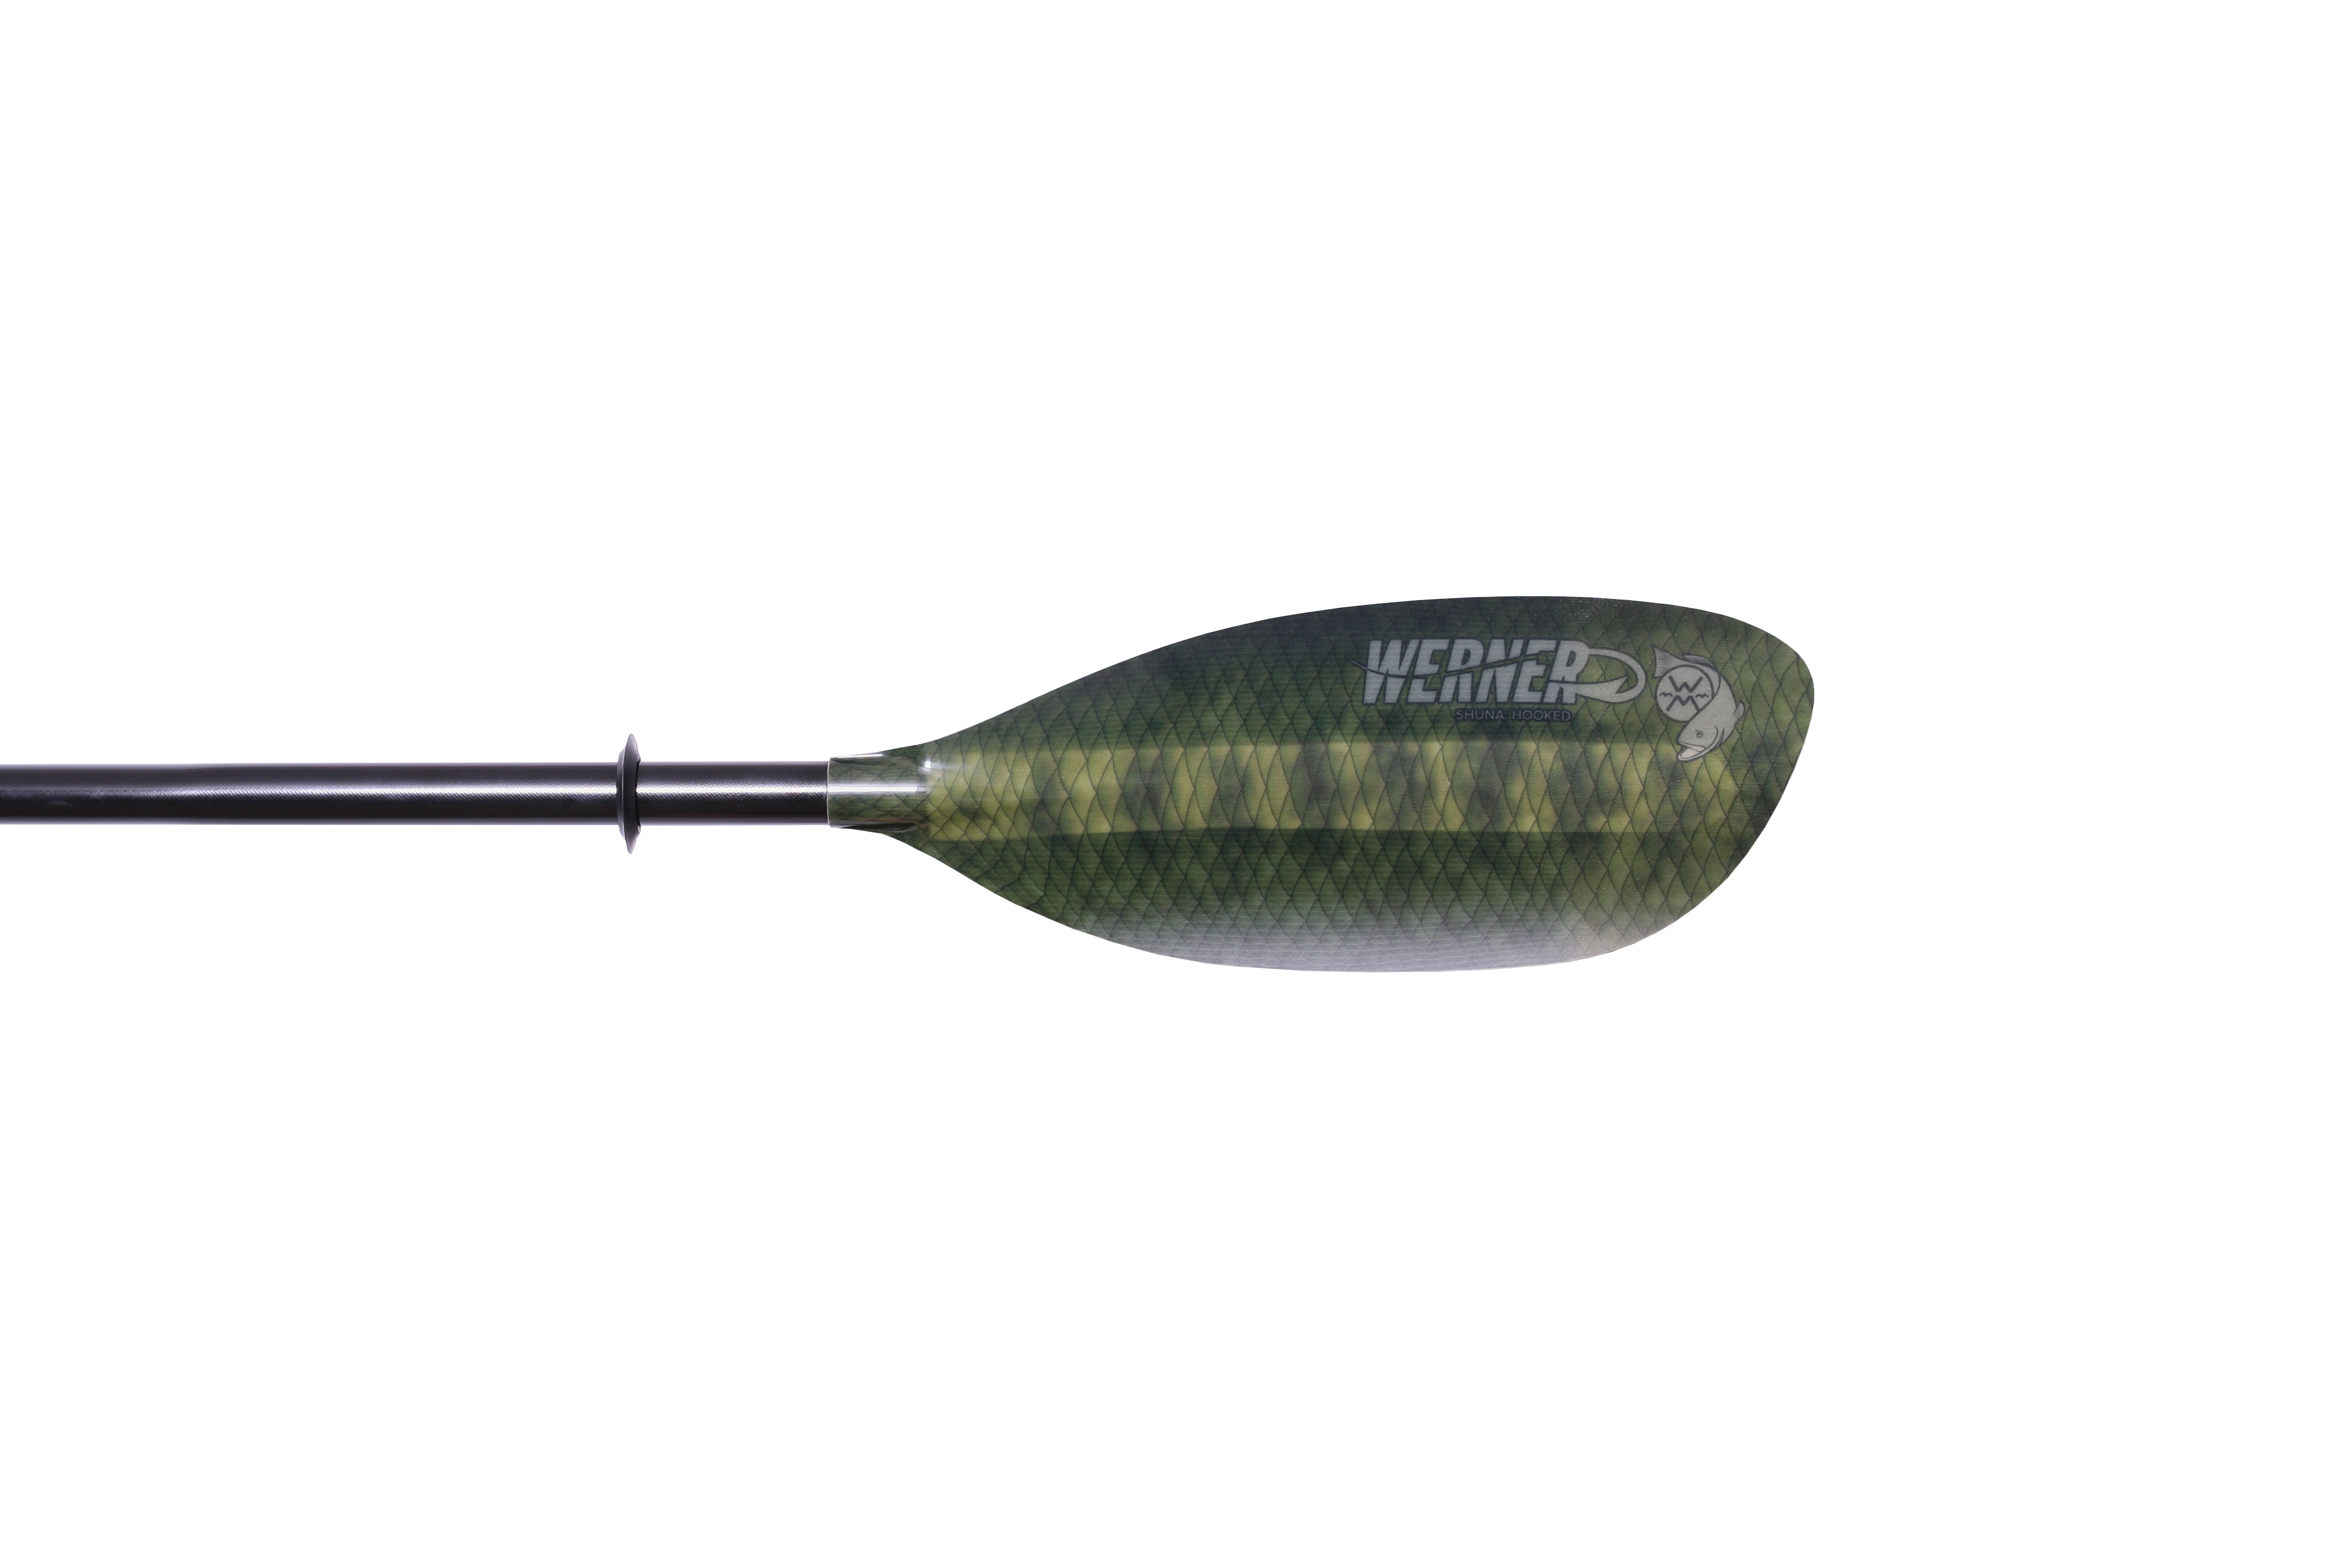 Kayak Paddles: Hooked Adjustable Shuna by Werner Paddles - Image 4449